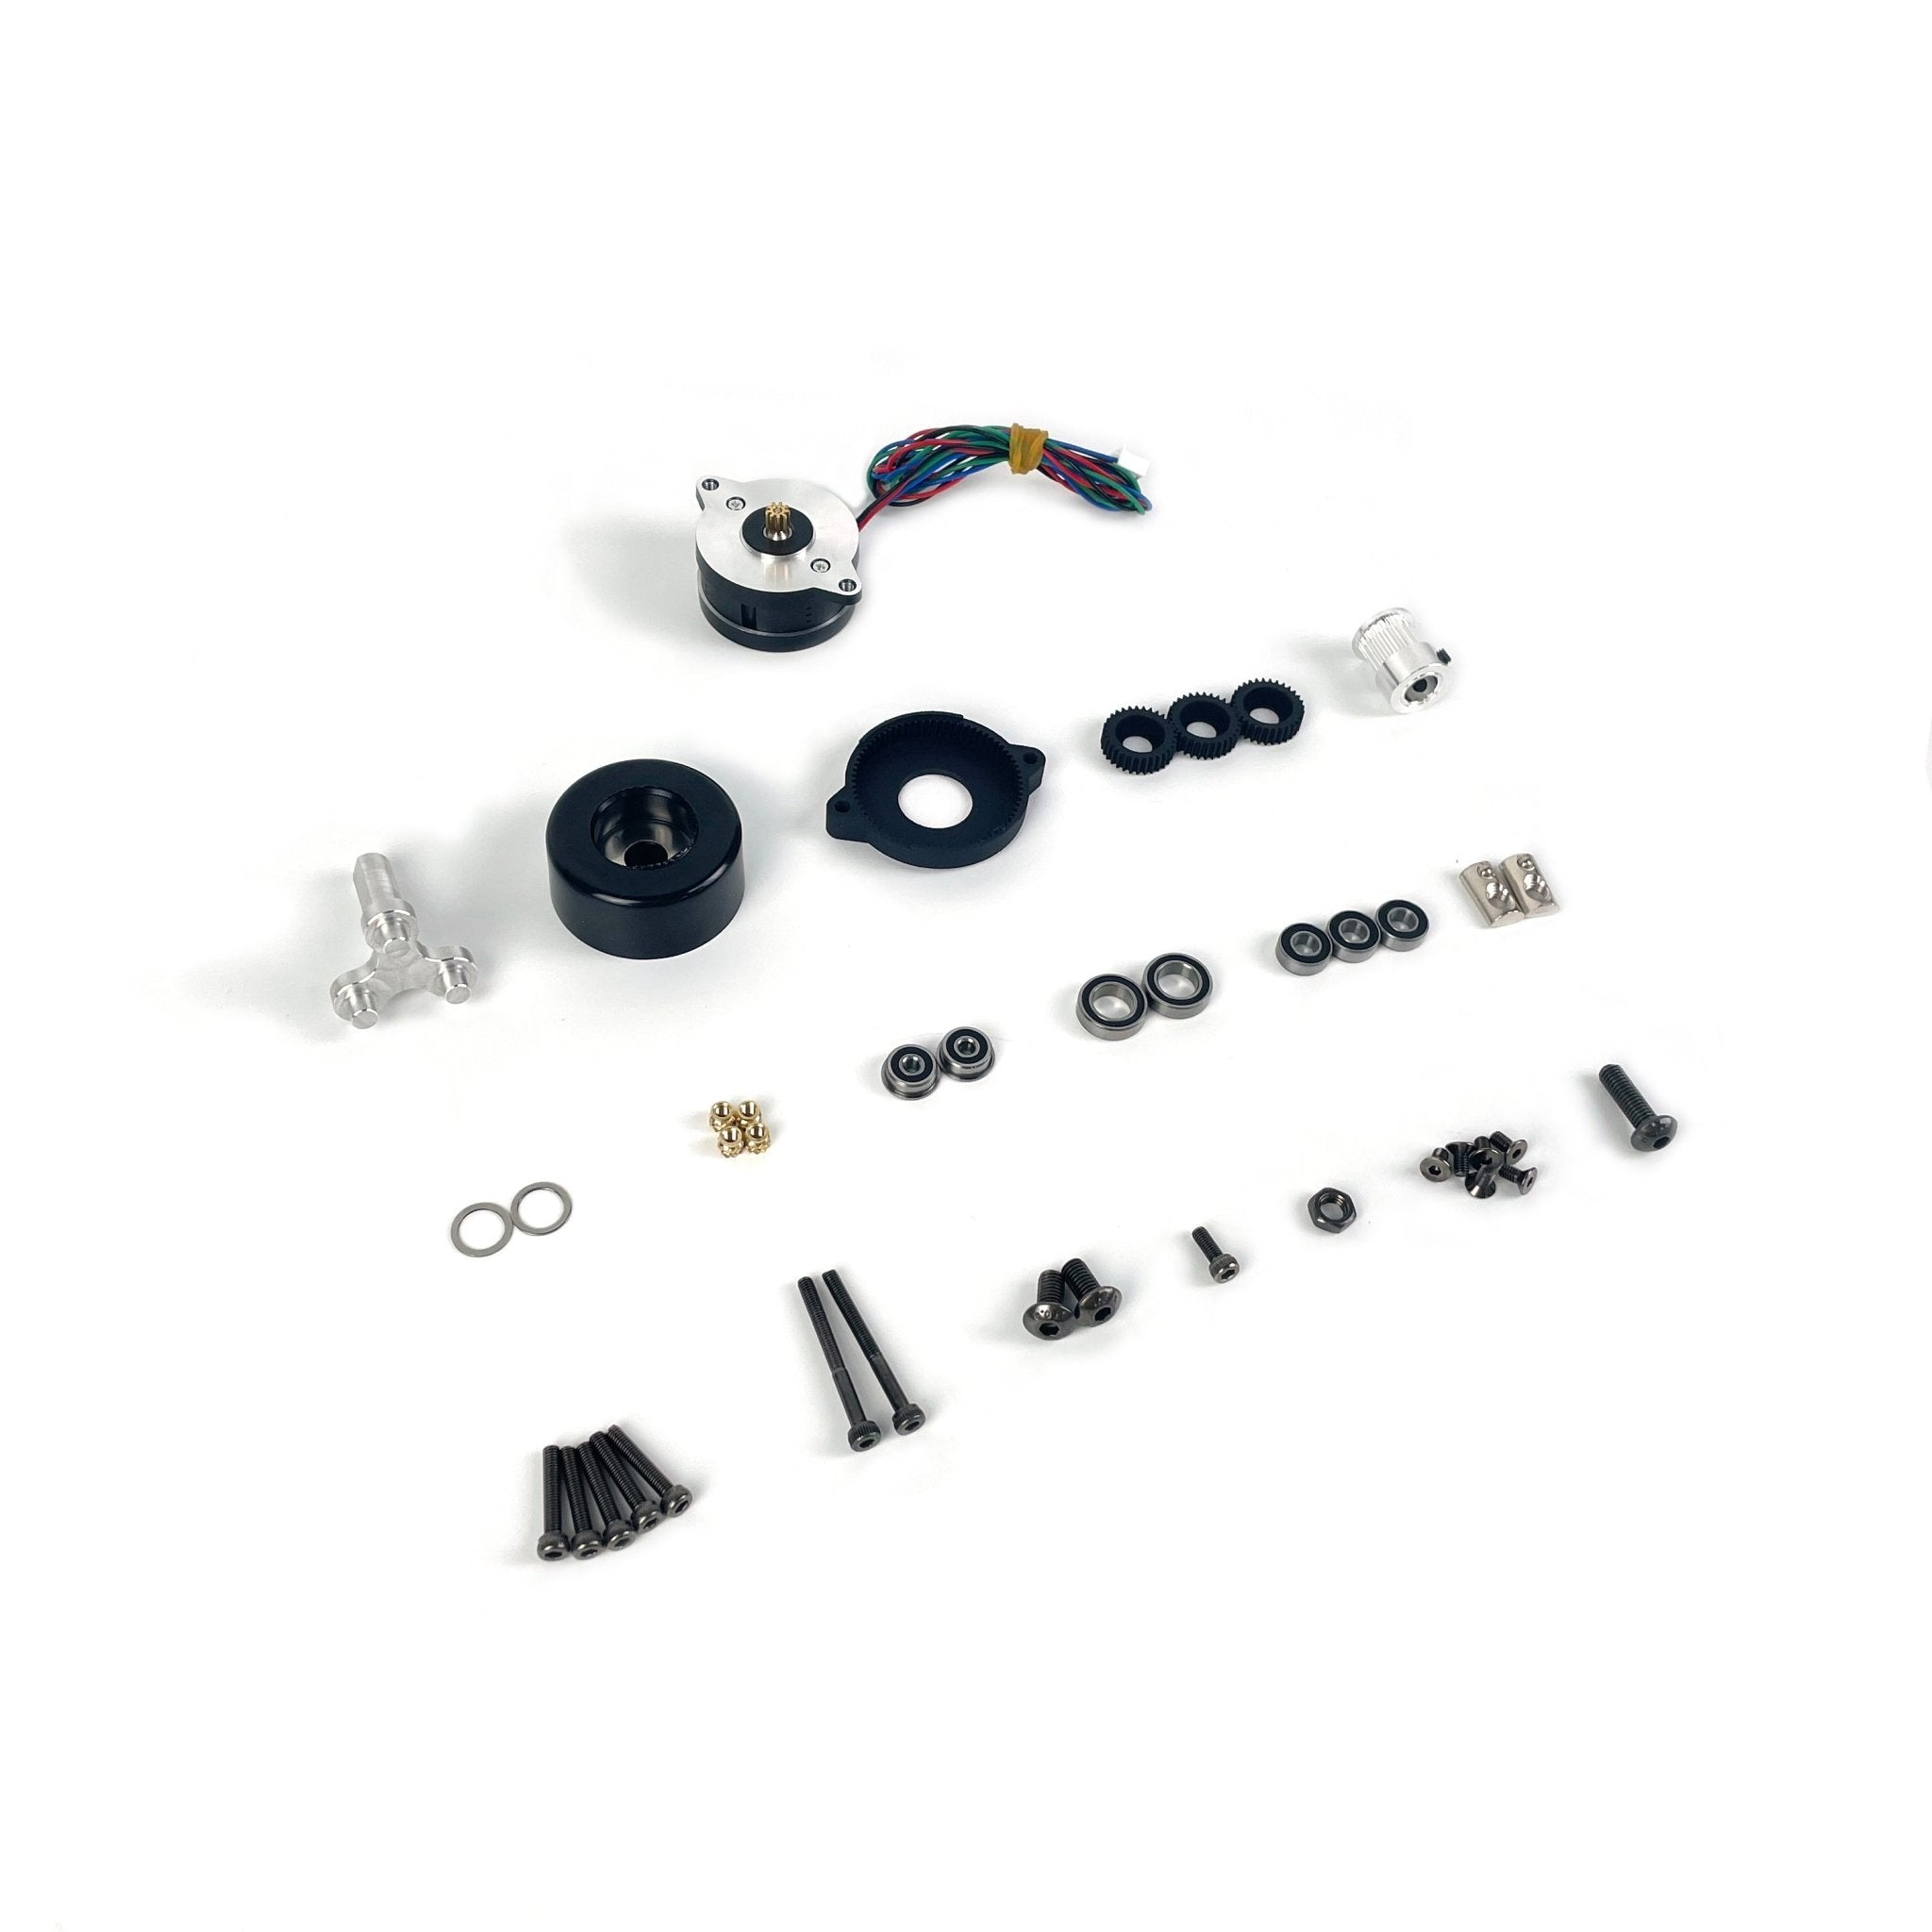 Galileo 2 Kit by JaredC01 (LDO Motors) - G2E and G2Z (Extruder and Z Drive  Kits)